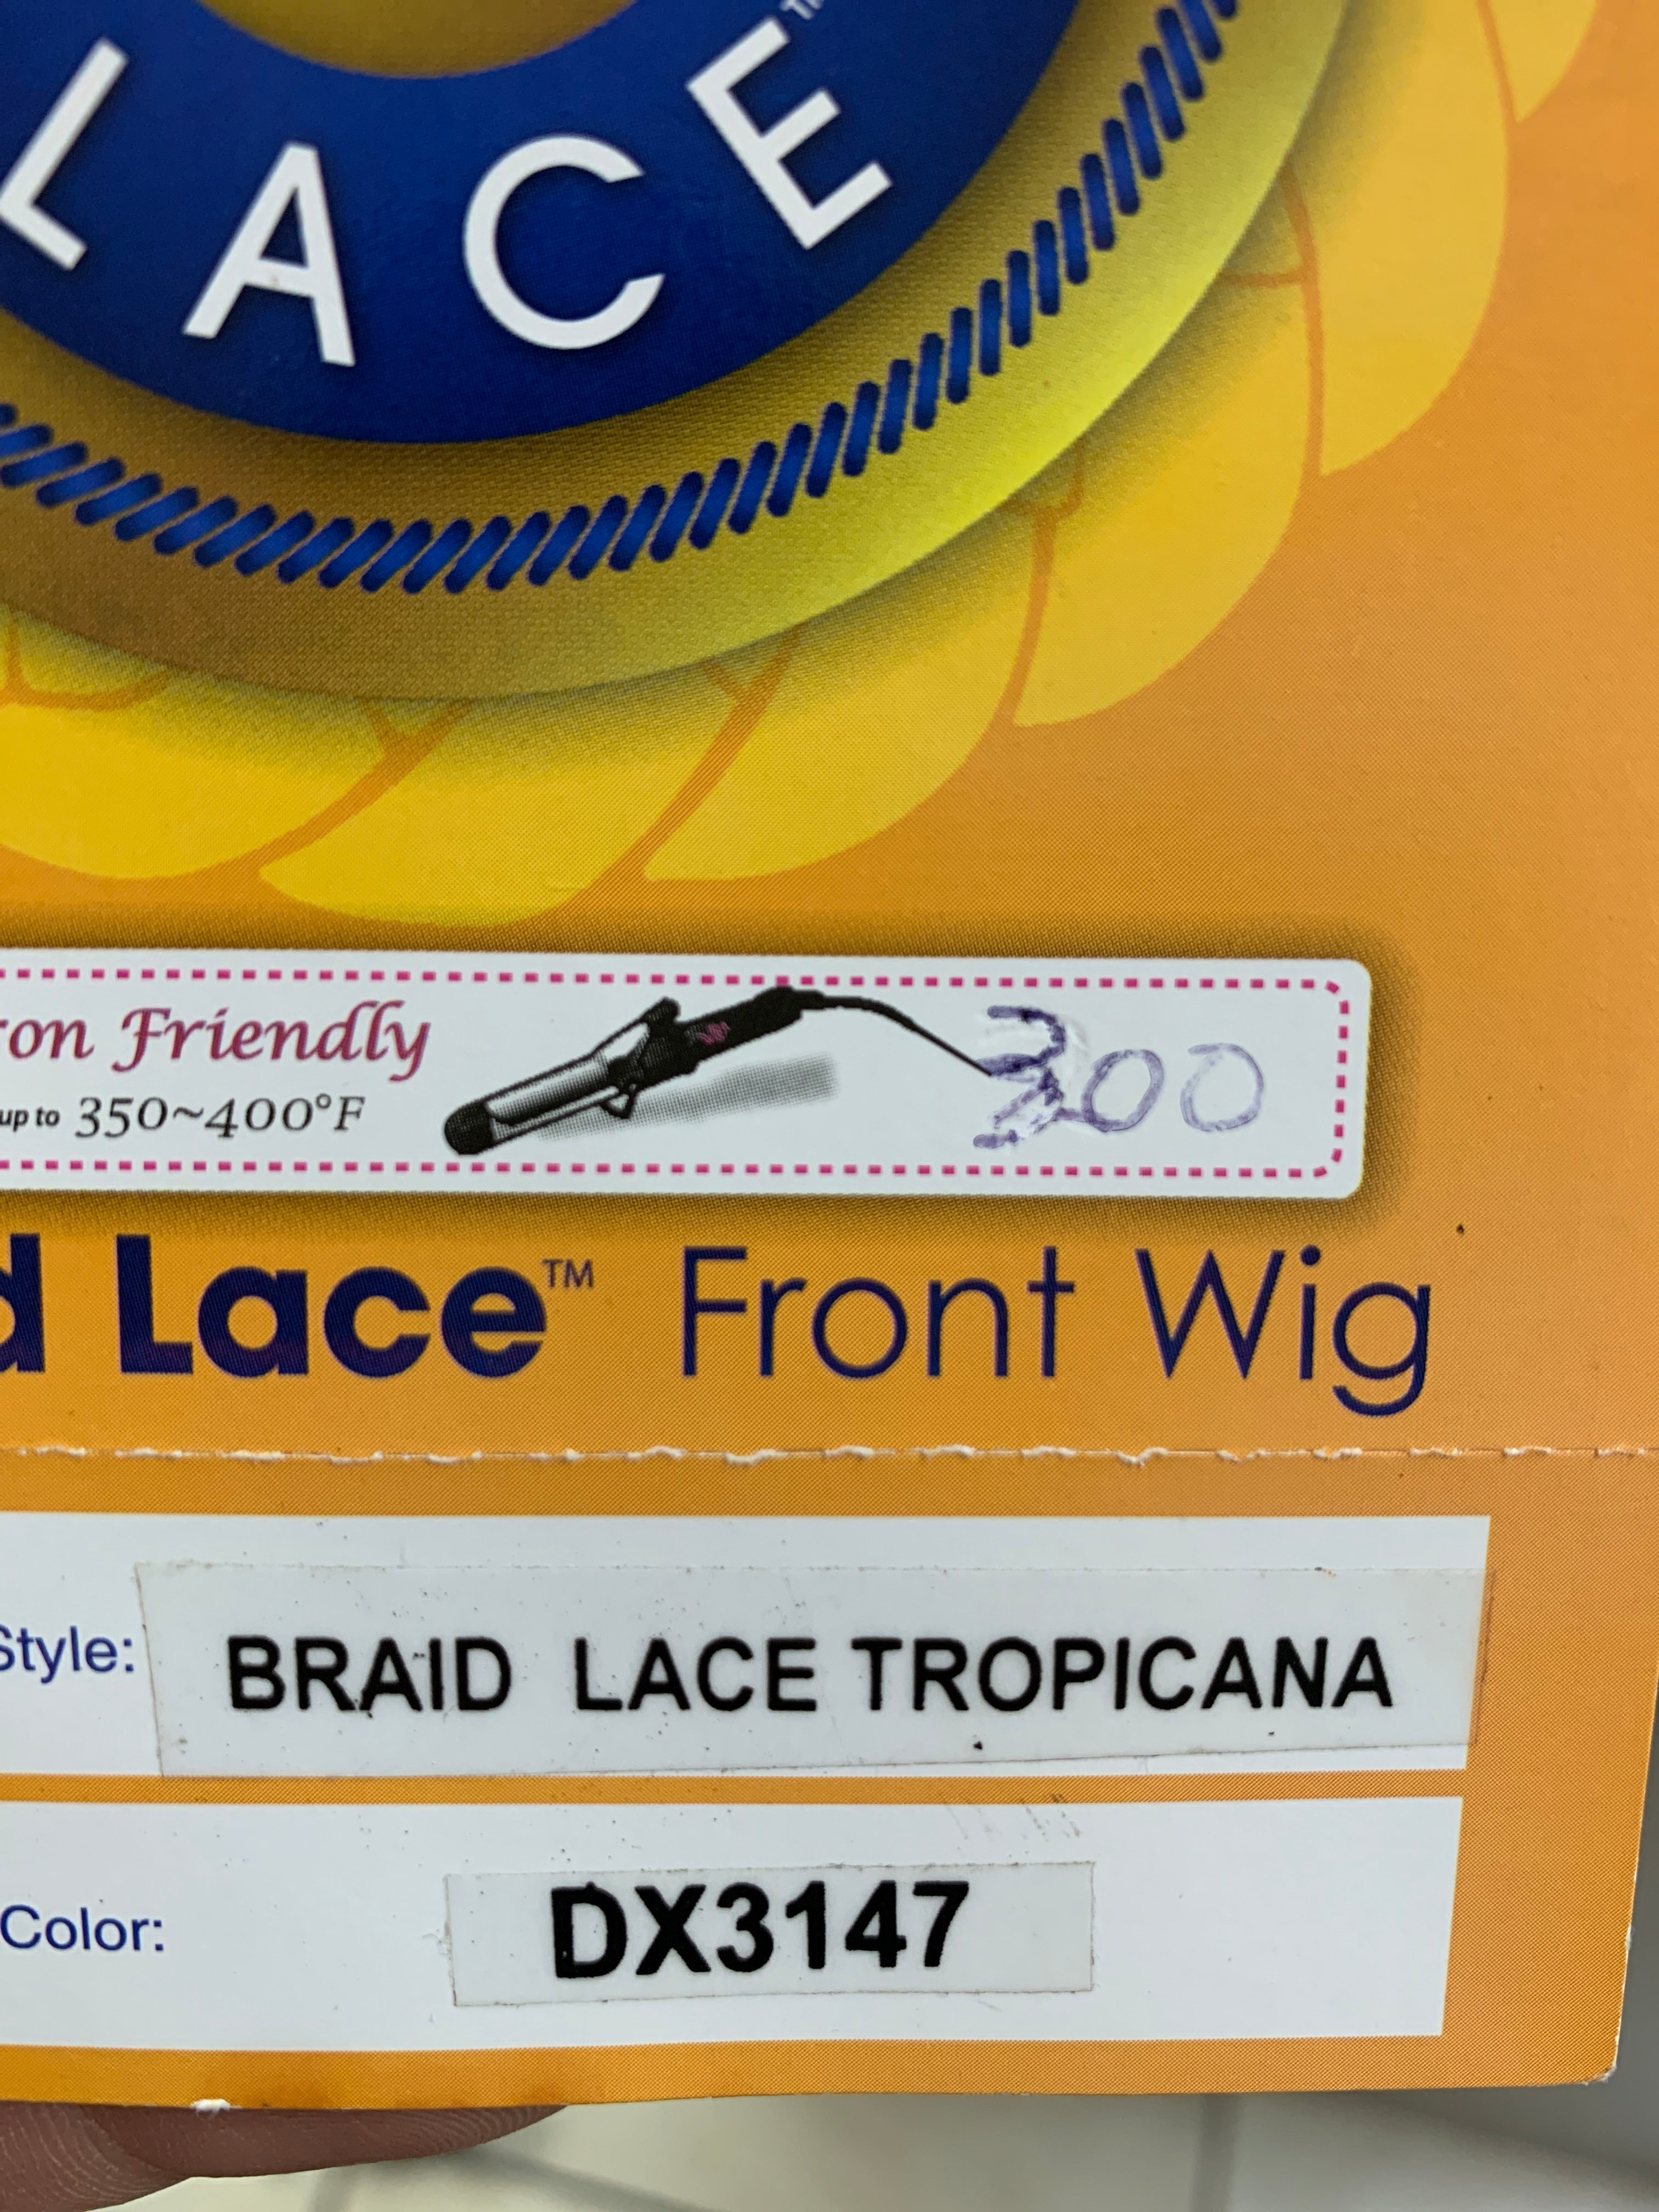 It’s a wig braid lace tropicana